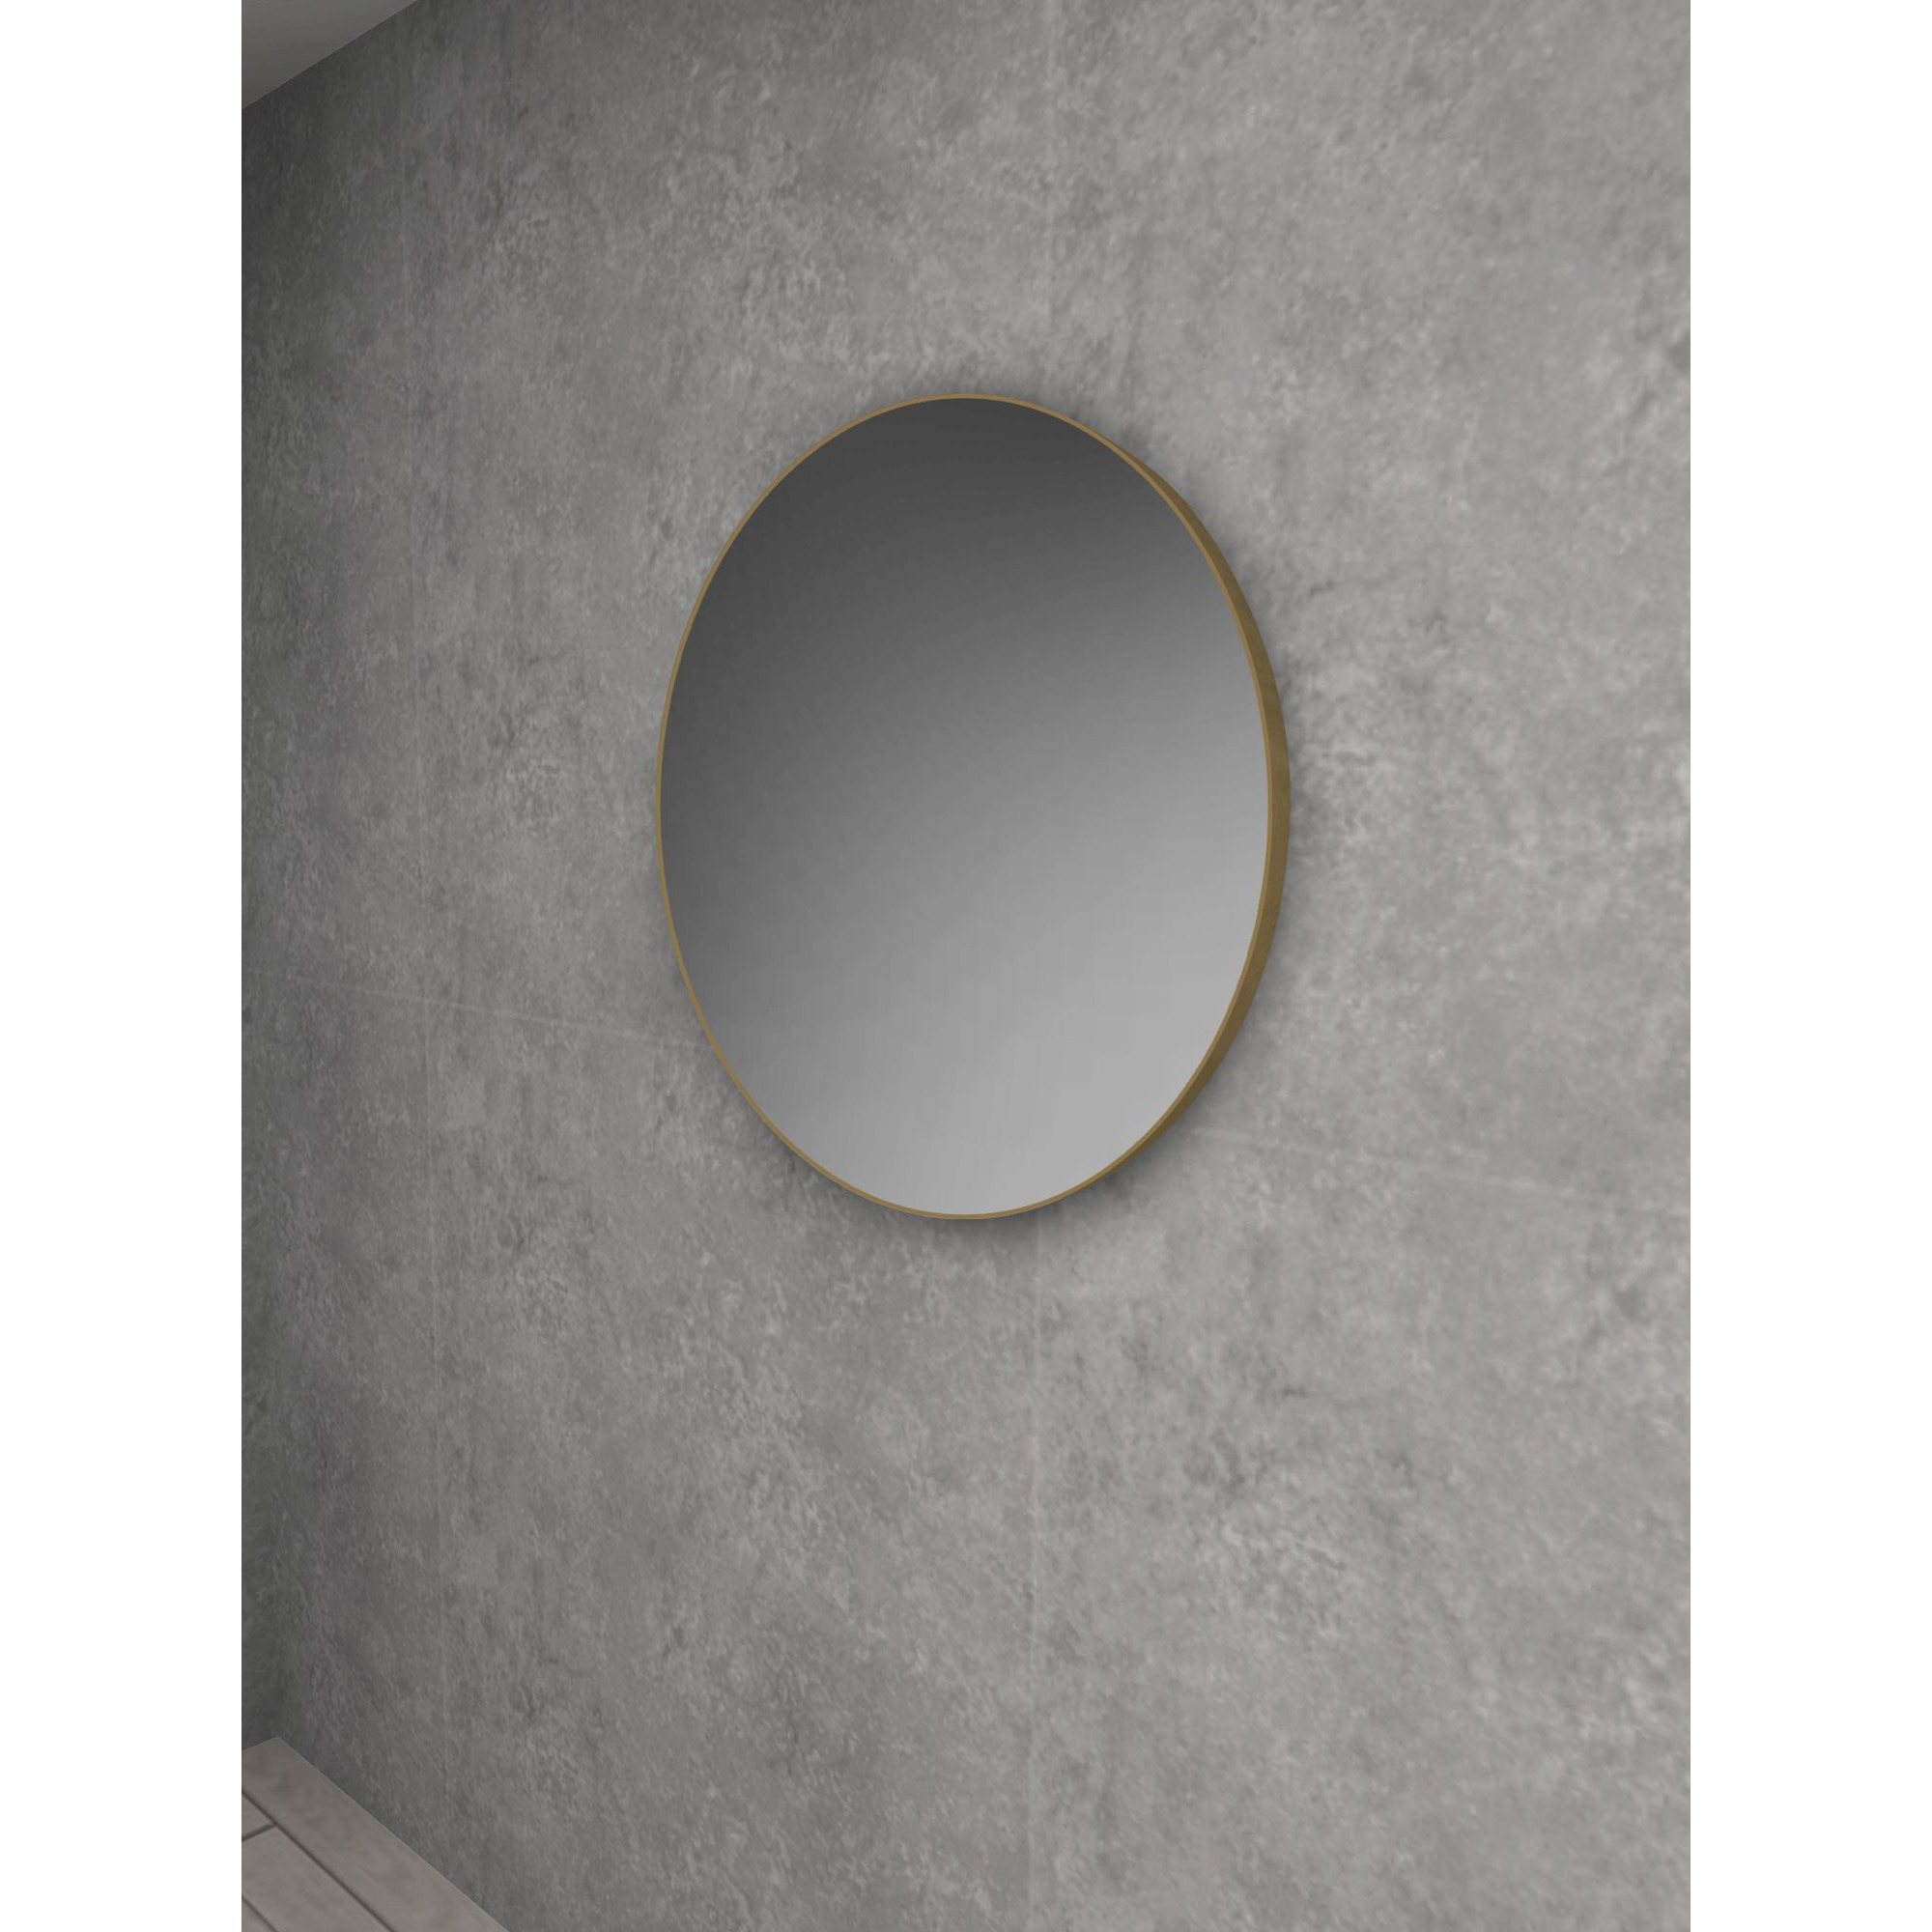 HiB Fusion Round Bathroom Mirror - image 1